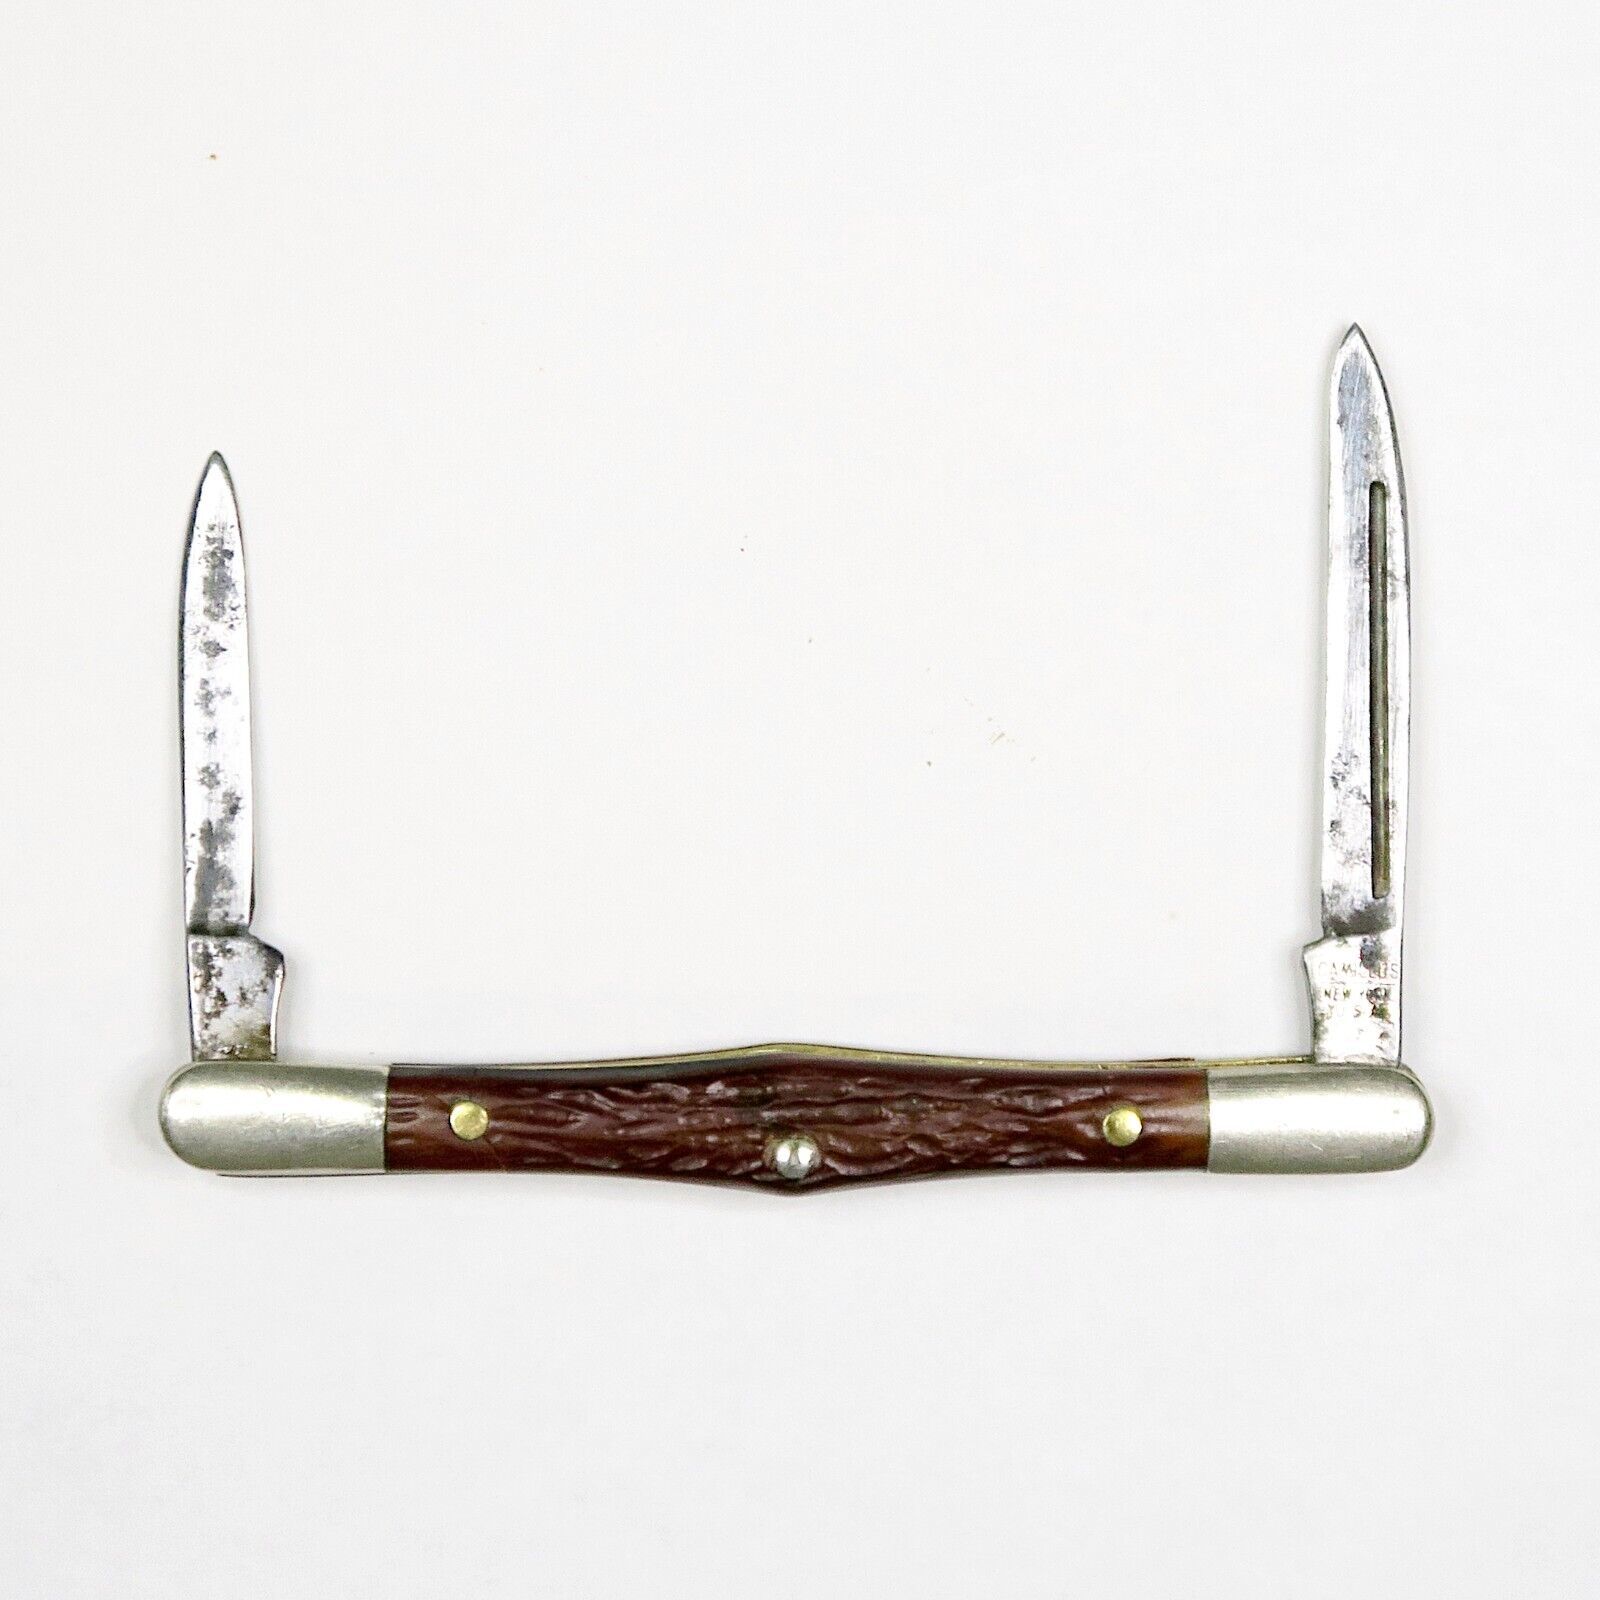 Camillus New York USA 49 Tuxedo Knife Gentleman's 2-Blade Folding Knife - $49.99